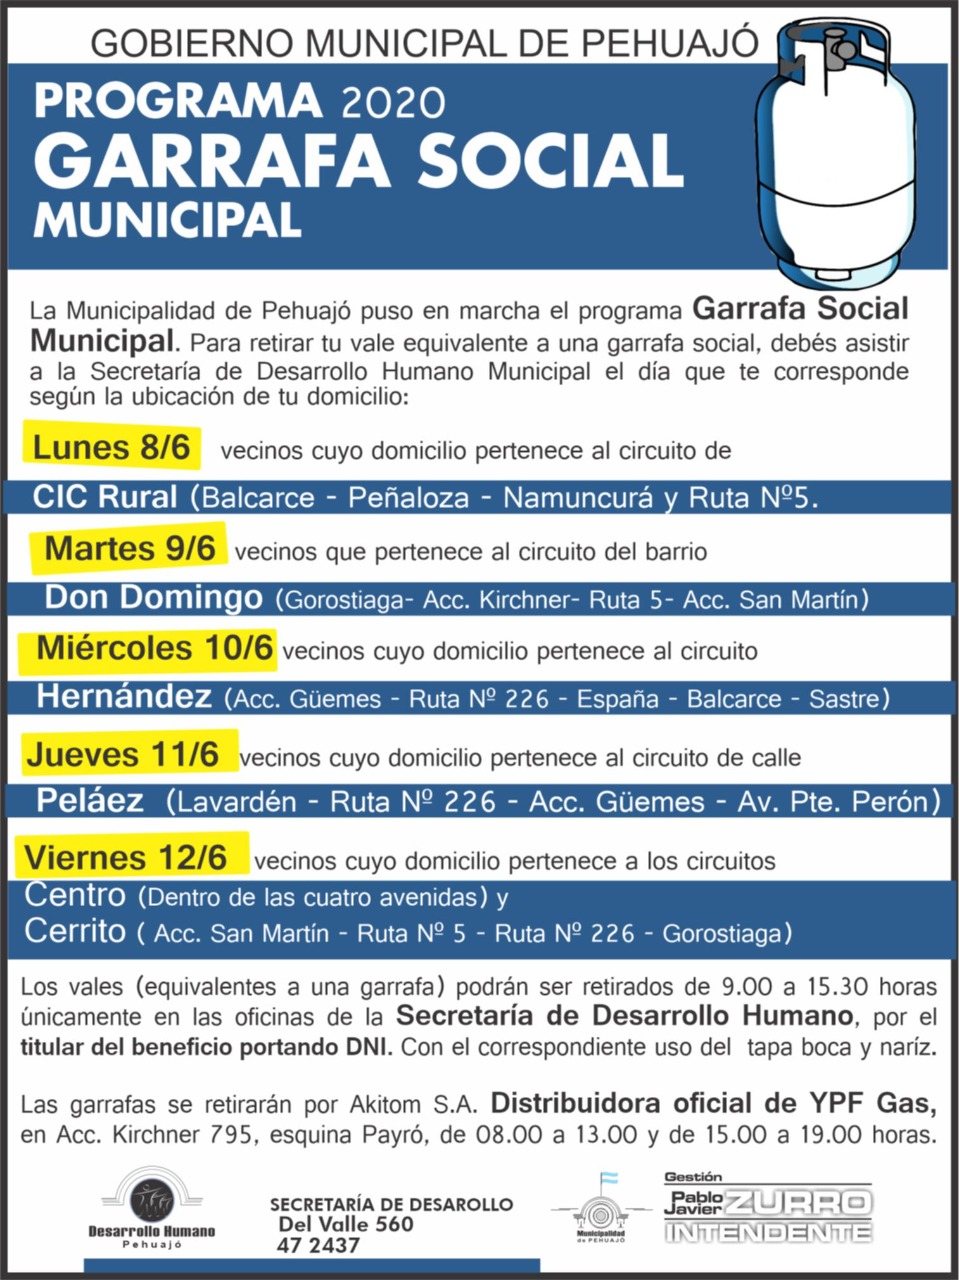 Comienza el Programa Garrafa Social Municipal en Pehuajó